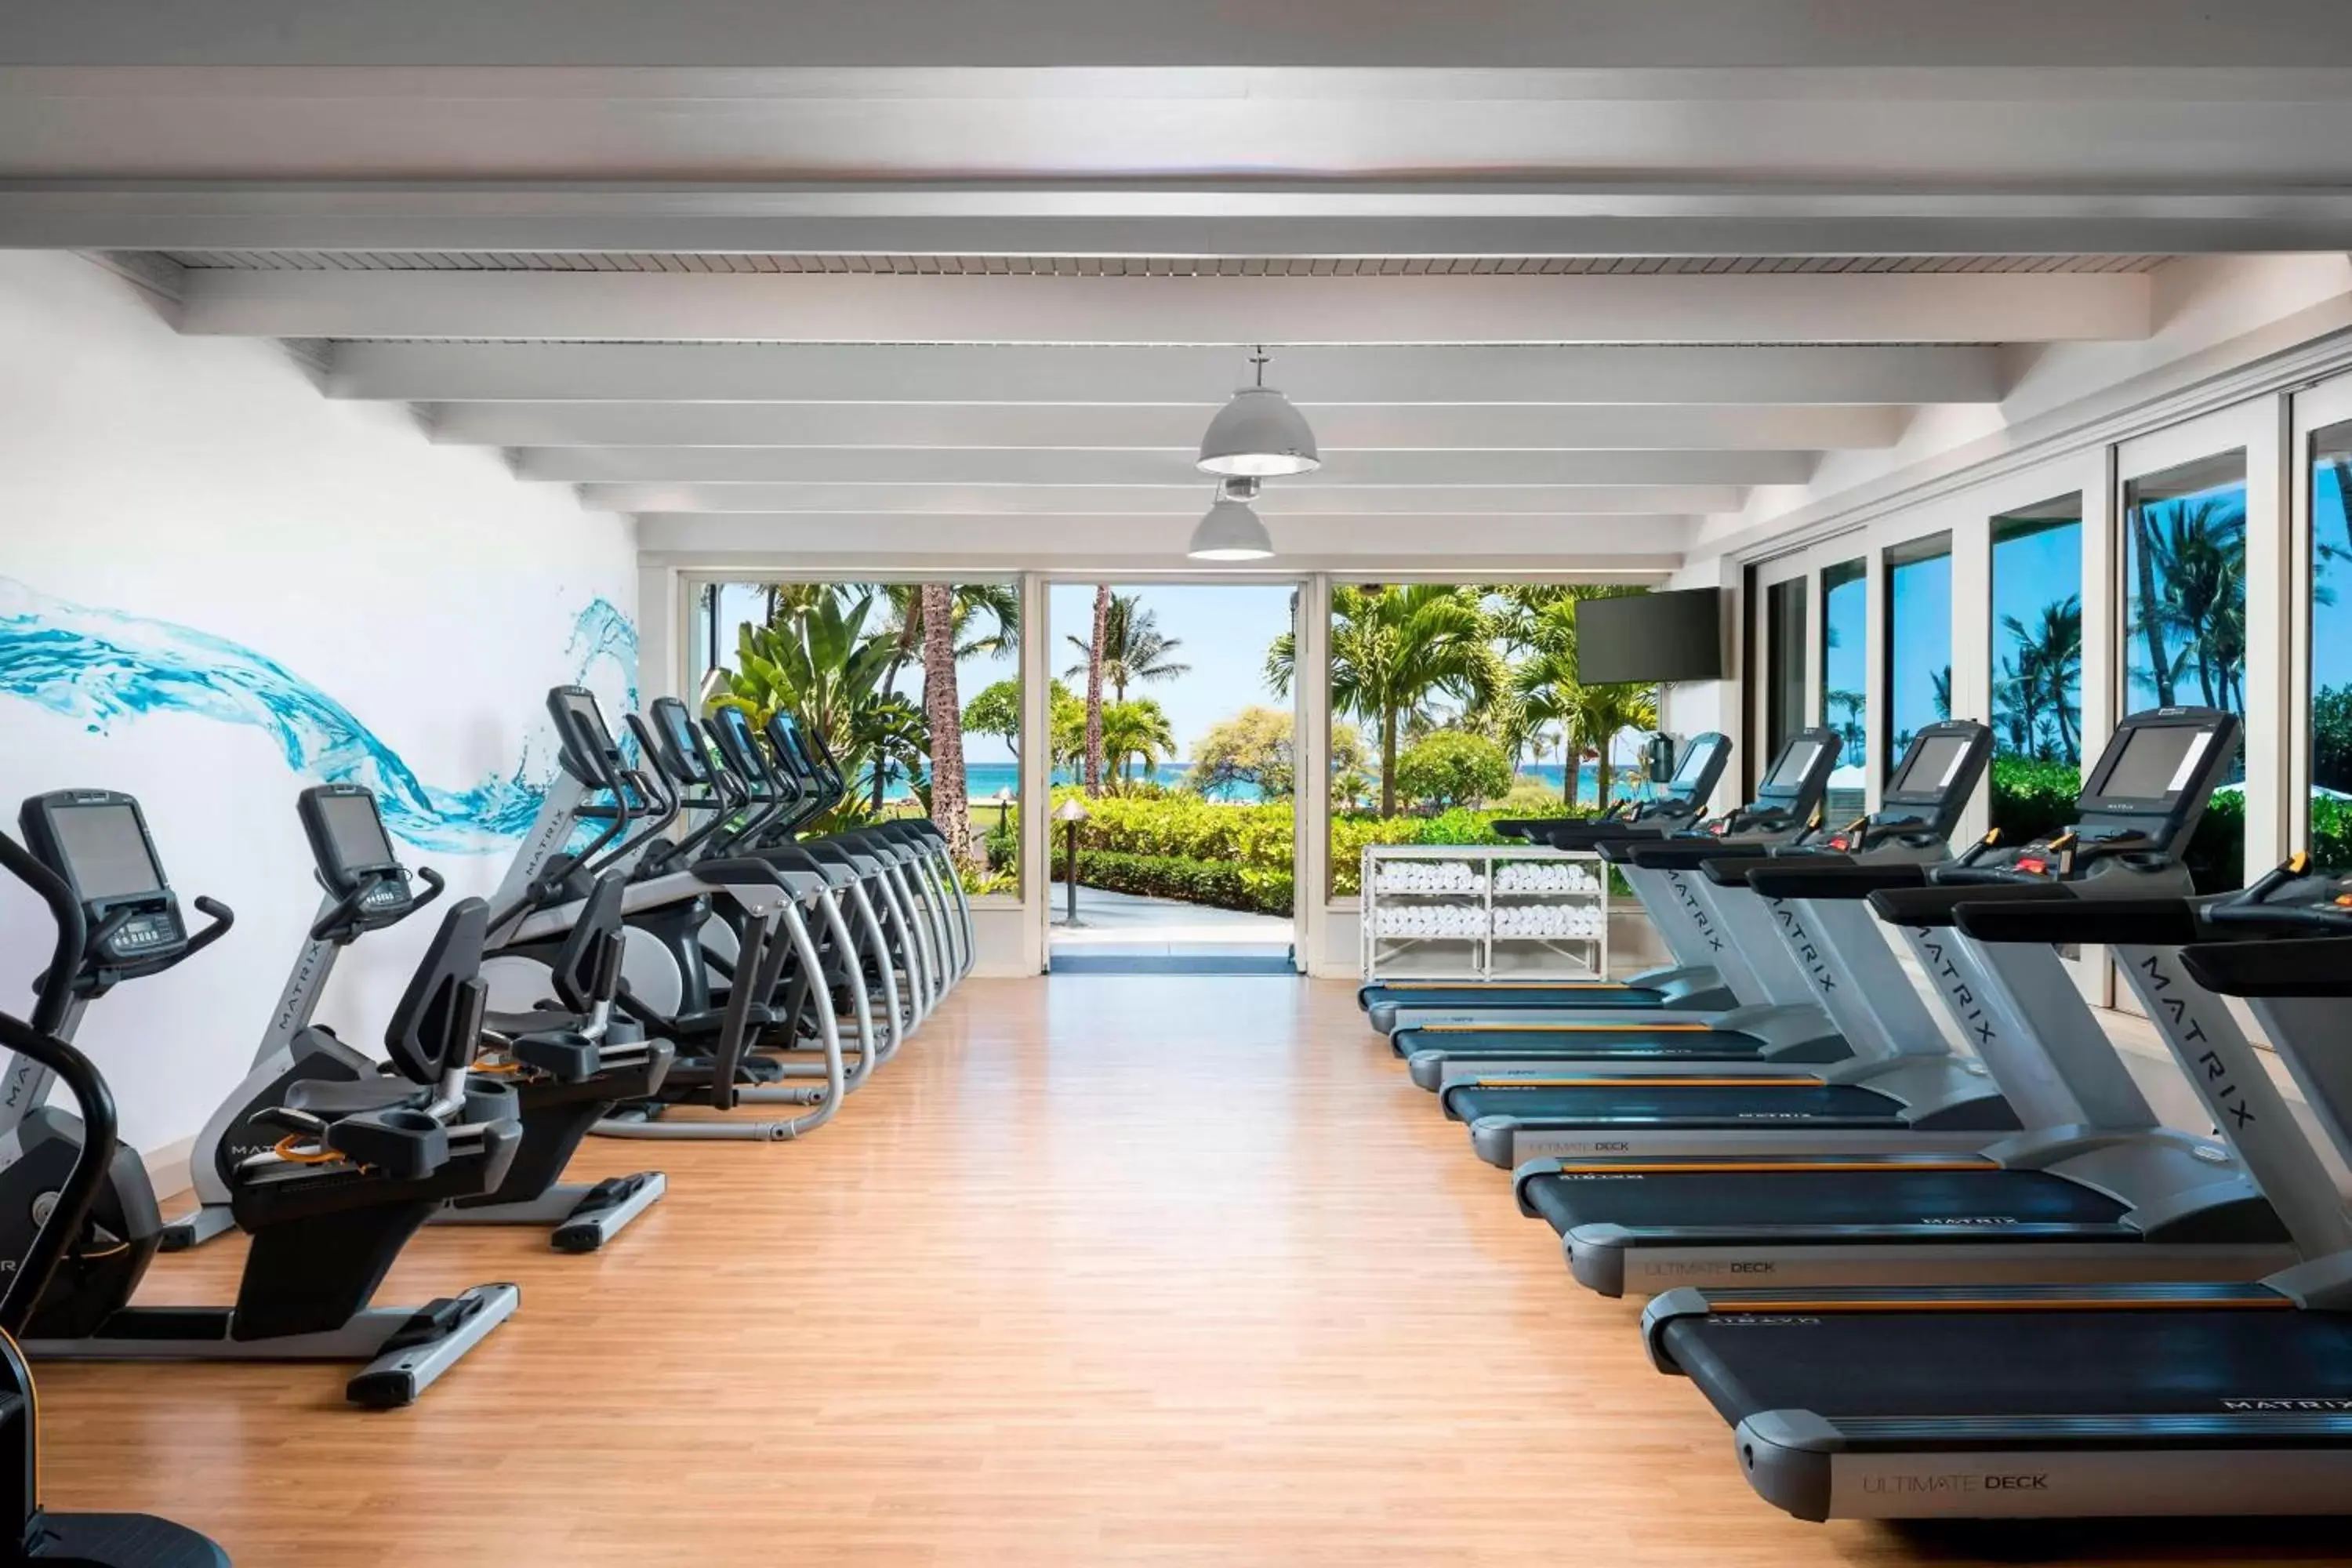 Fitness centre/facilities, Fitness Center/Facilities in Waikoloa Beach Marriott Resort & Spa